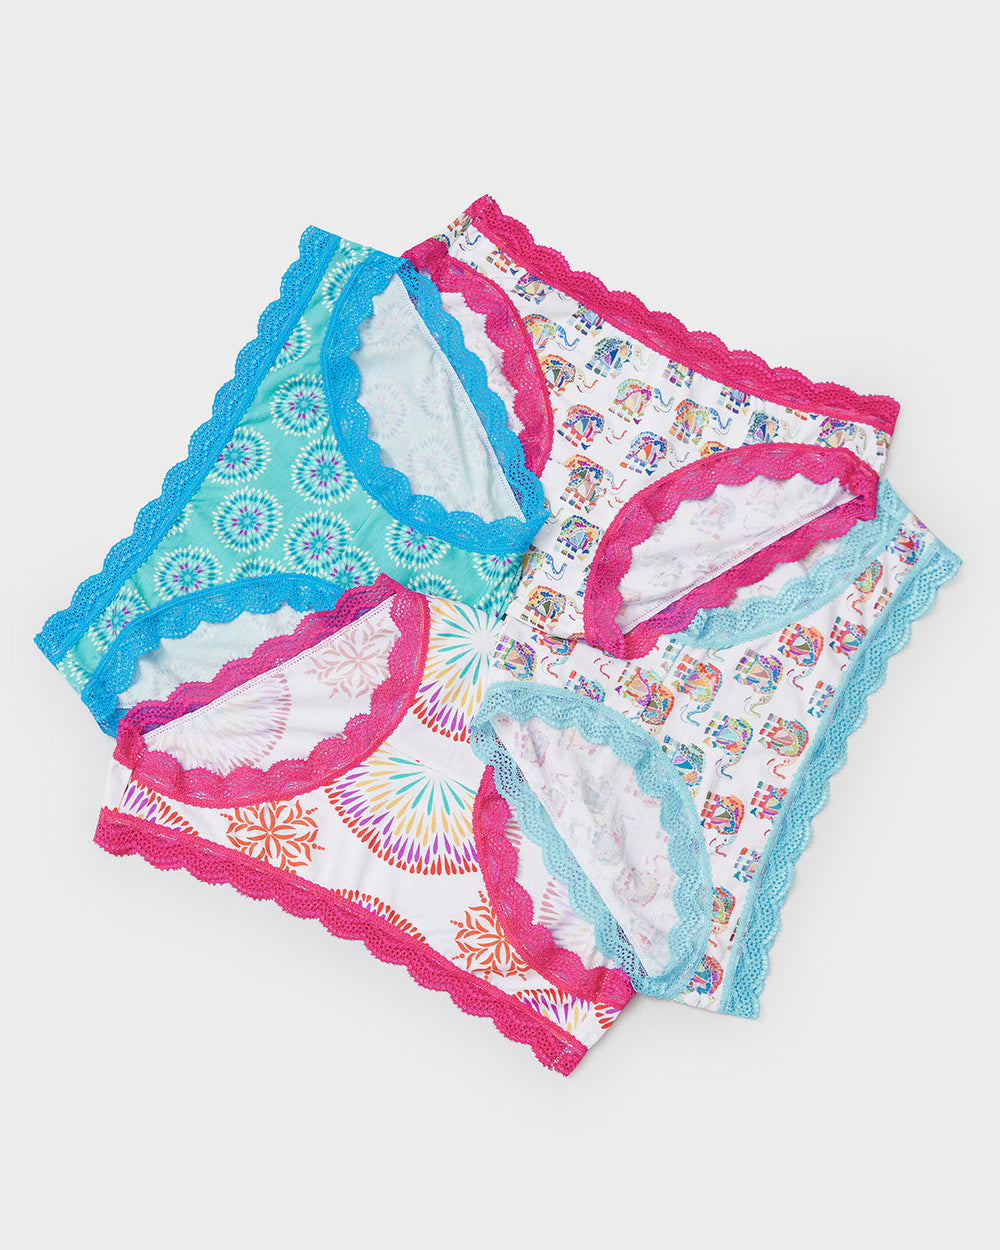 Knotty Underwear - Women's Underwear 6 Pack - Hearts, Polkadot, Patterned  and Lace Briefs